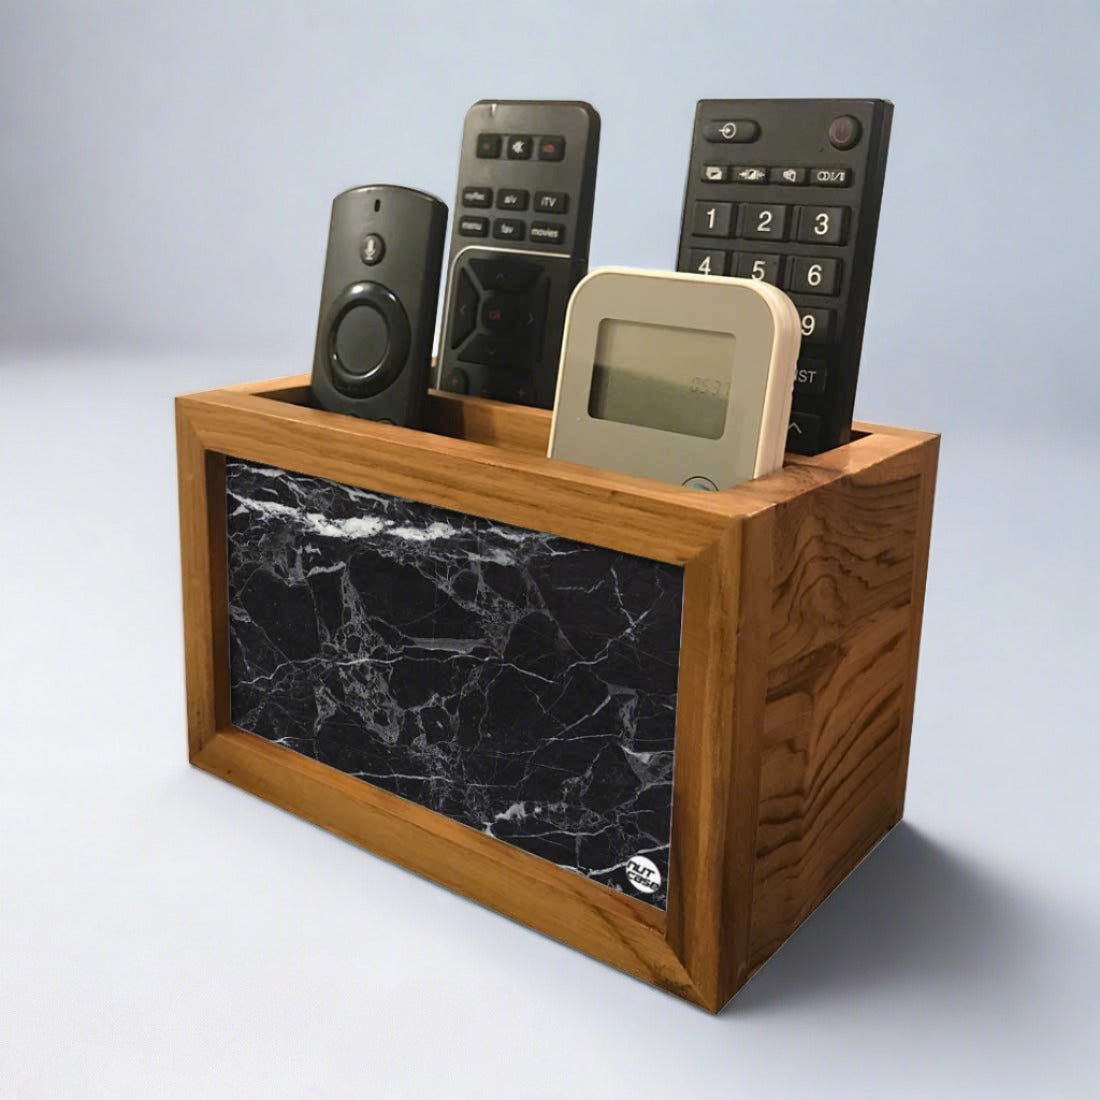 Black Remote Control Holder For TV / AC Remotes -  Marble Black Nutcase